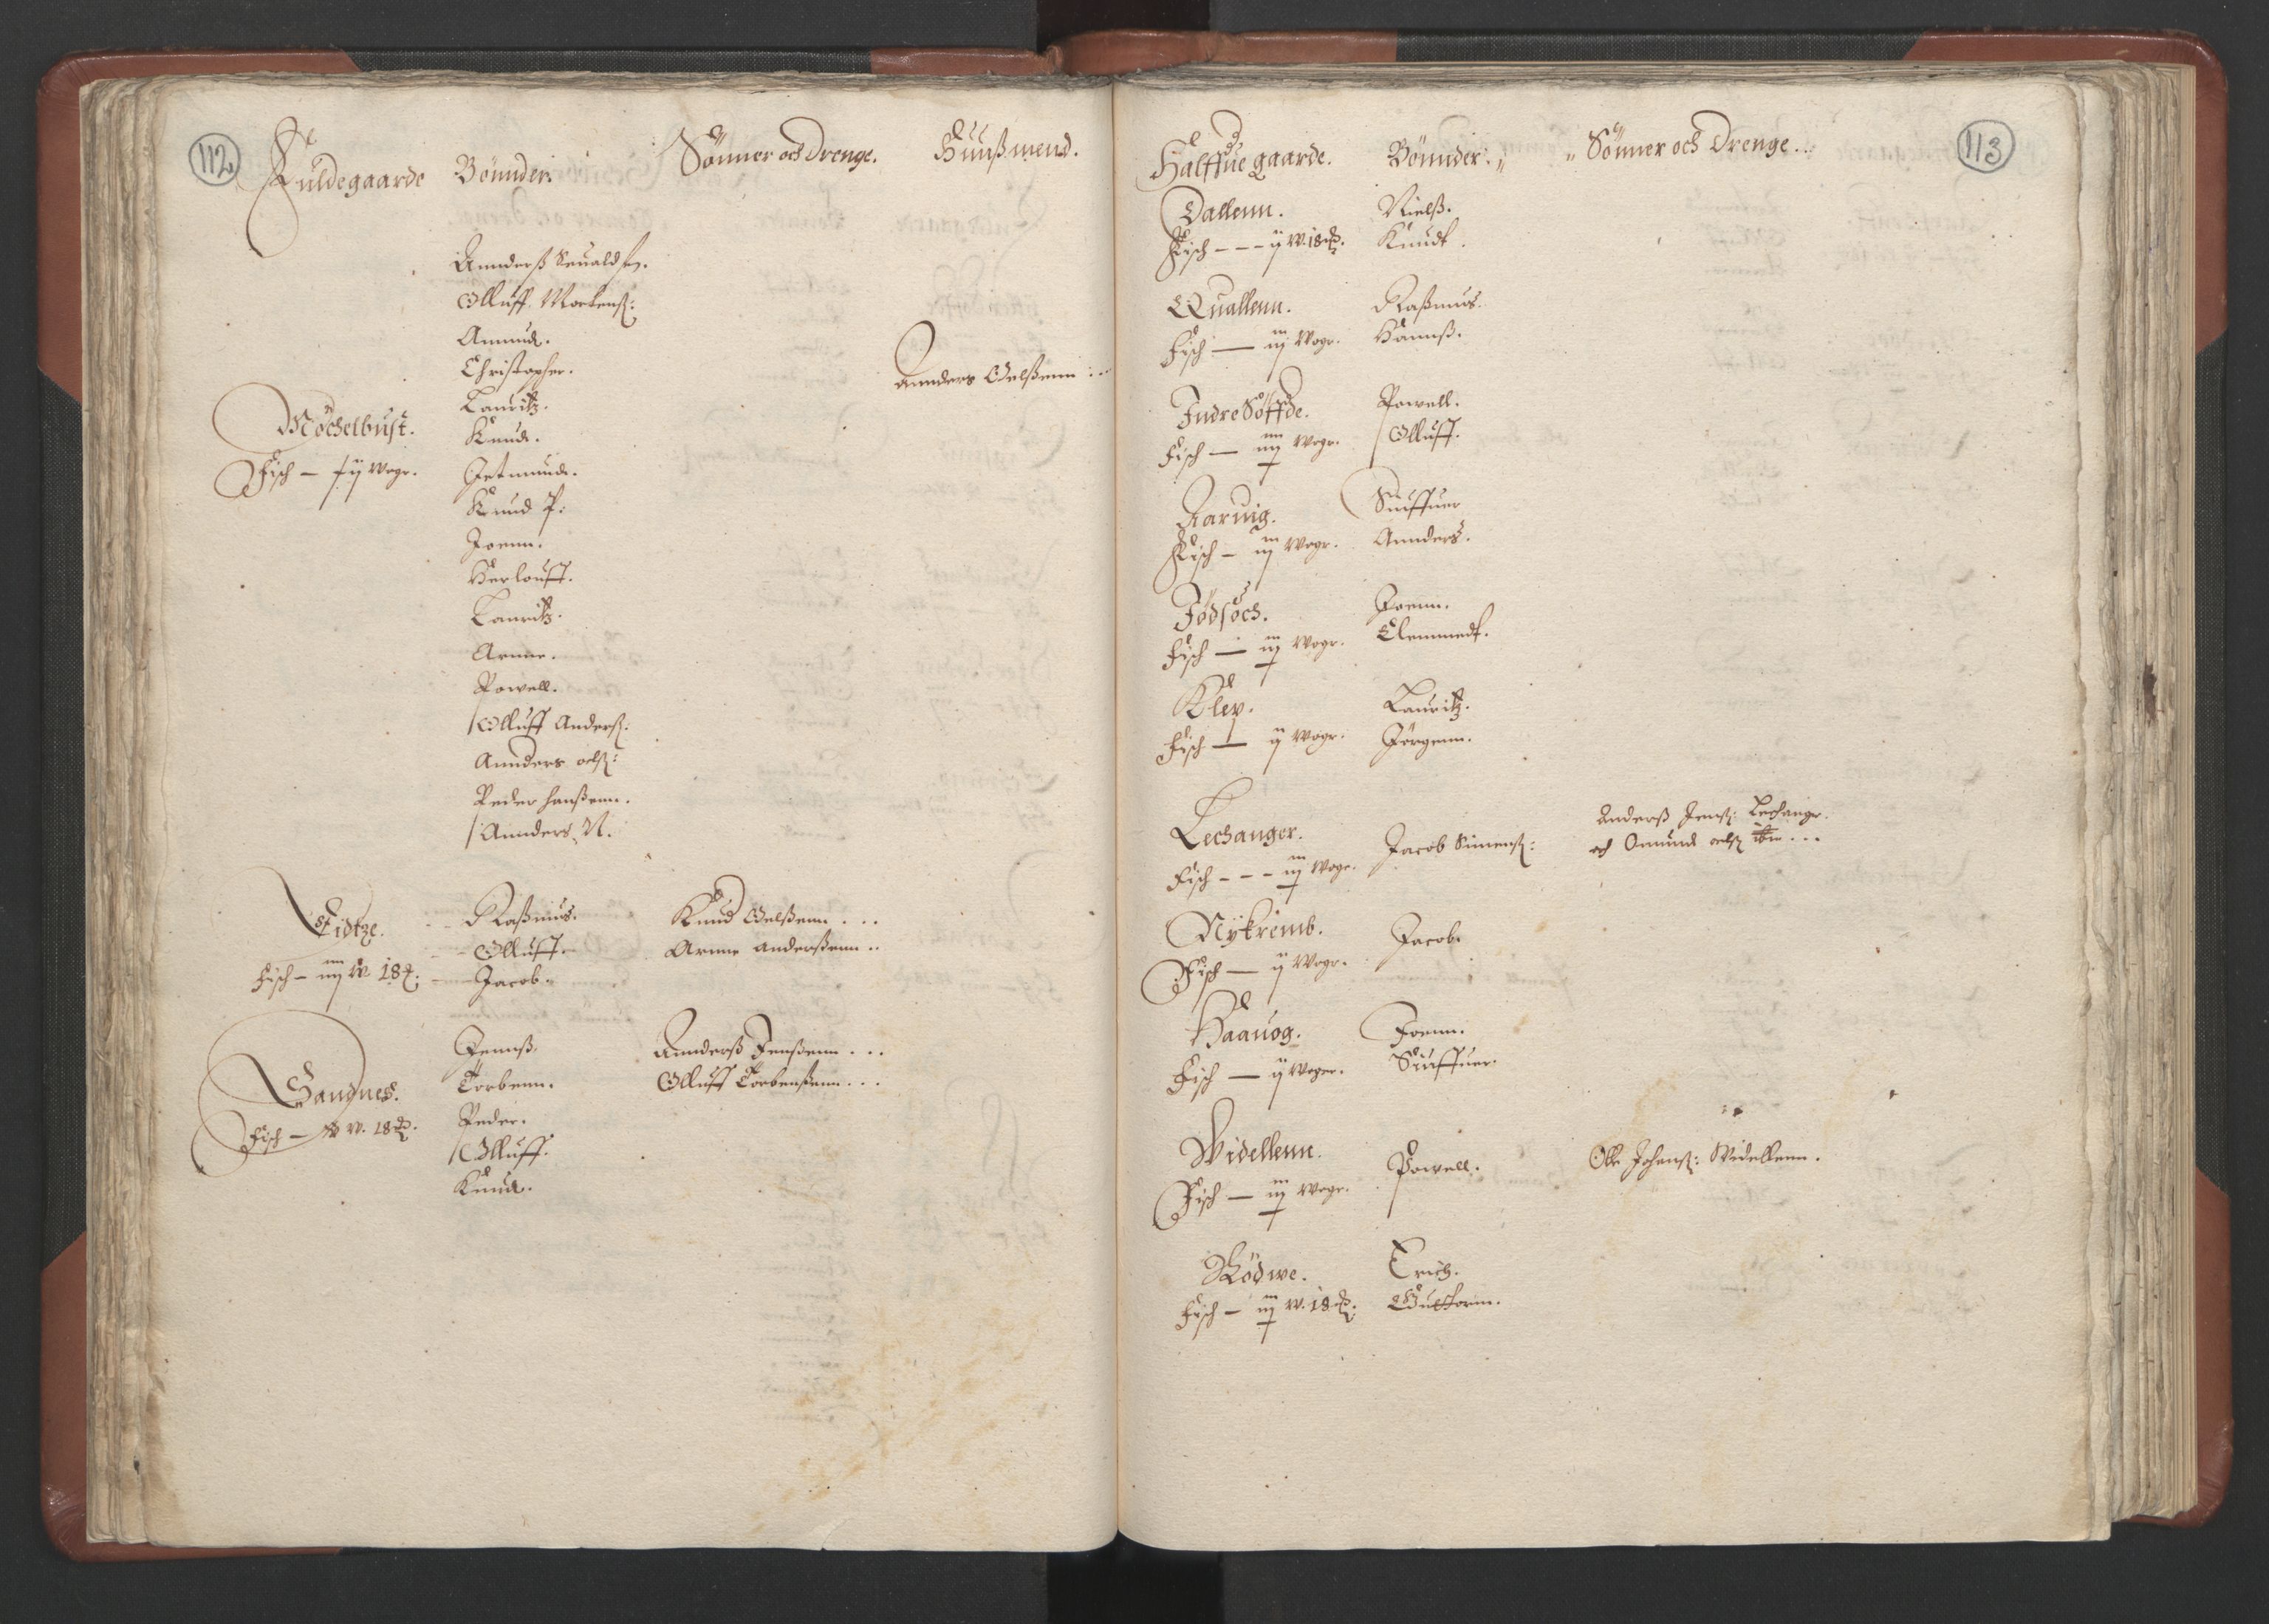 RA, Fogdenes og sorenskrivernes manntall 1664-1666, nr. 16: Romsdal fogderi og Sunnmøre fogderi, 1664-1665, s. 112-113